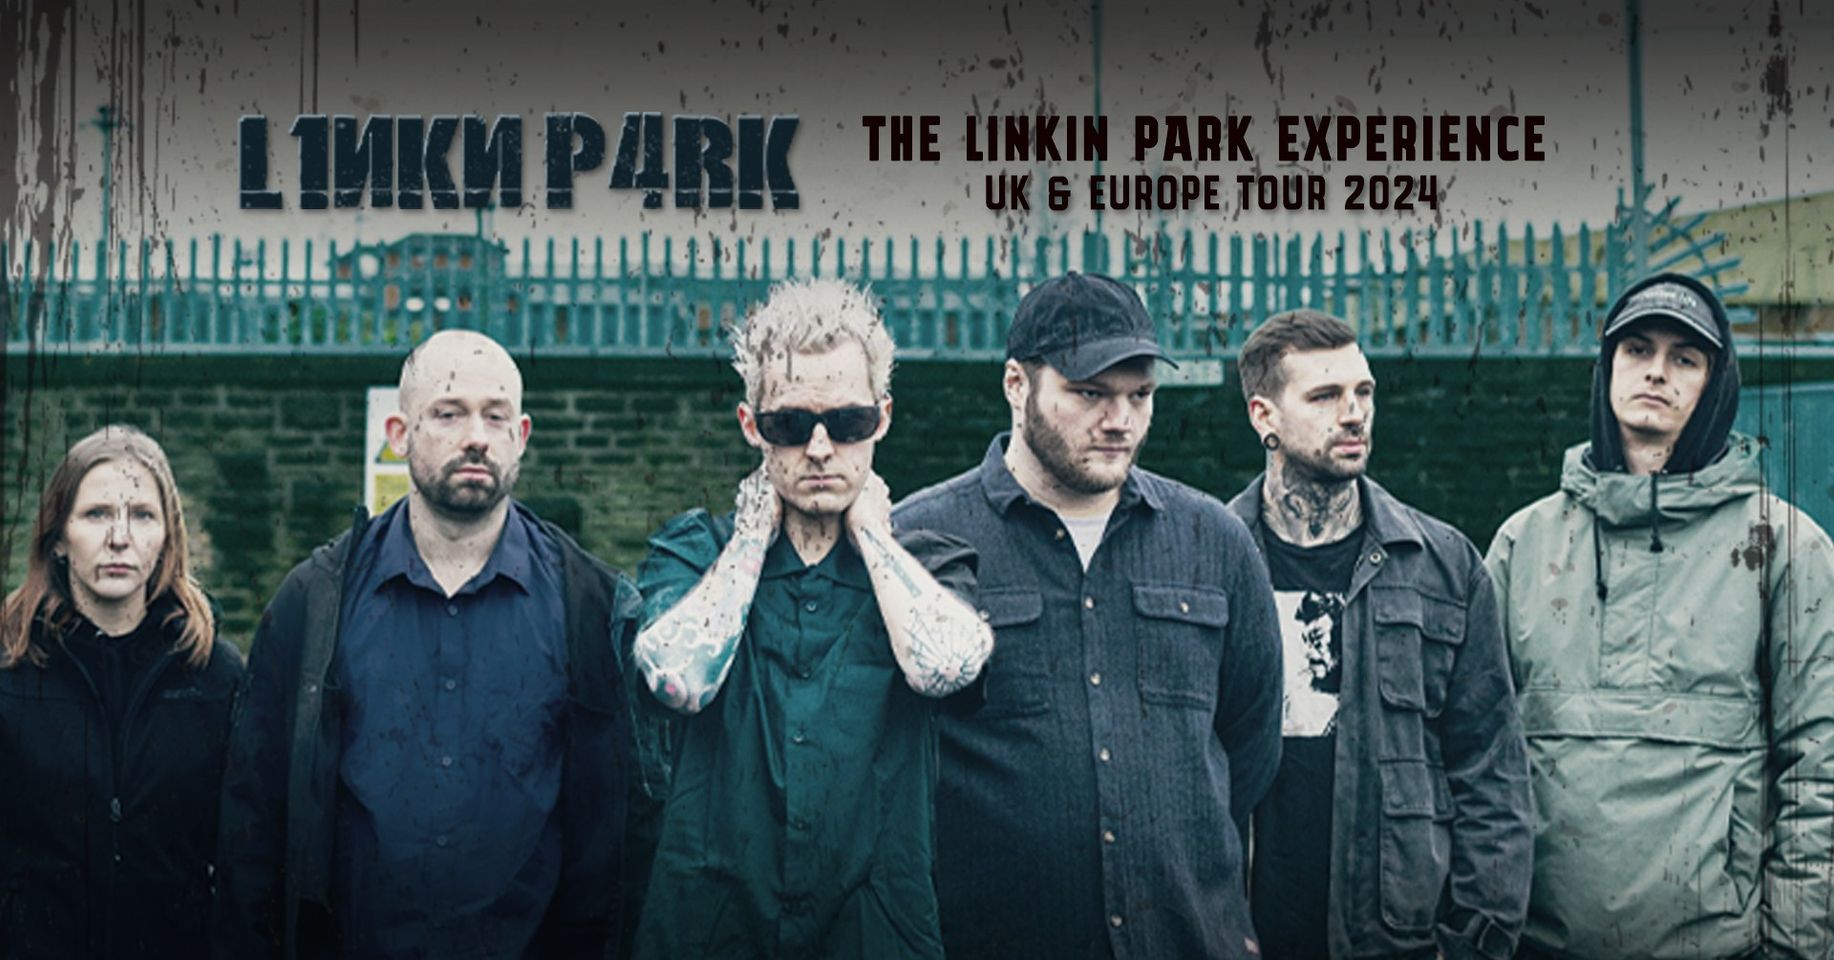 L1NKN P4RK (The Linkin Park experience)